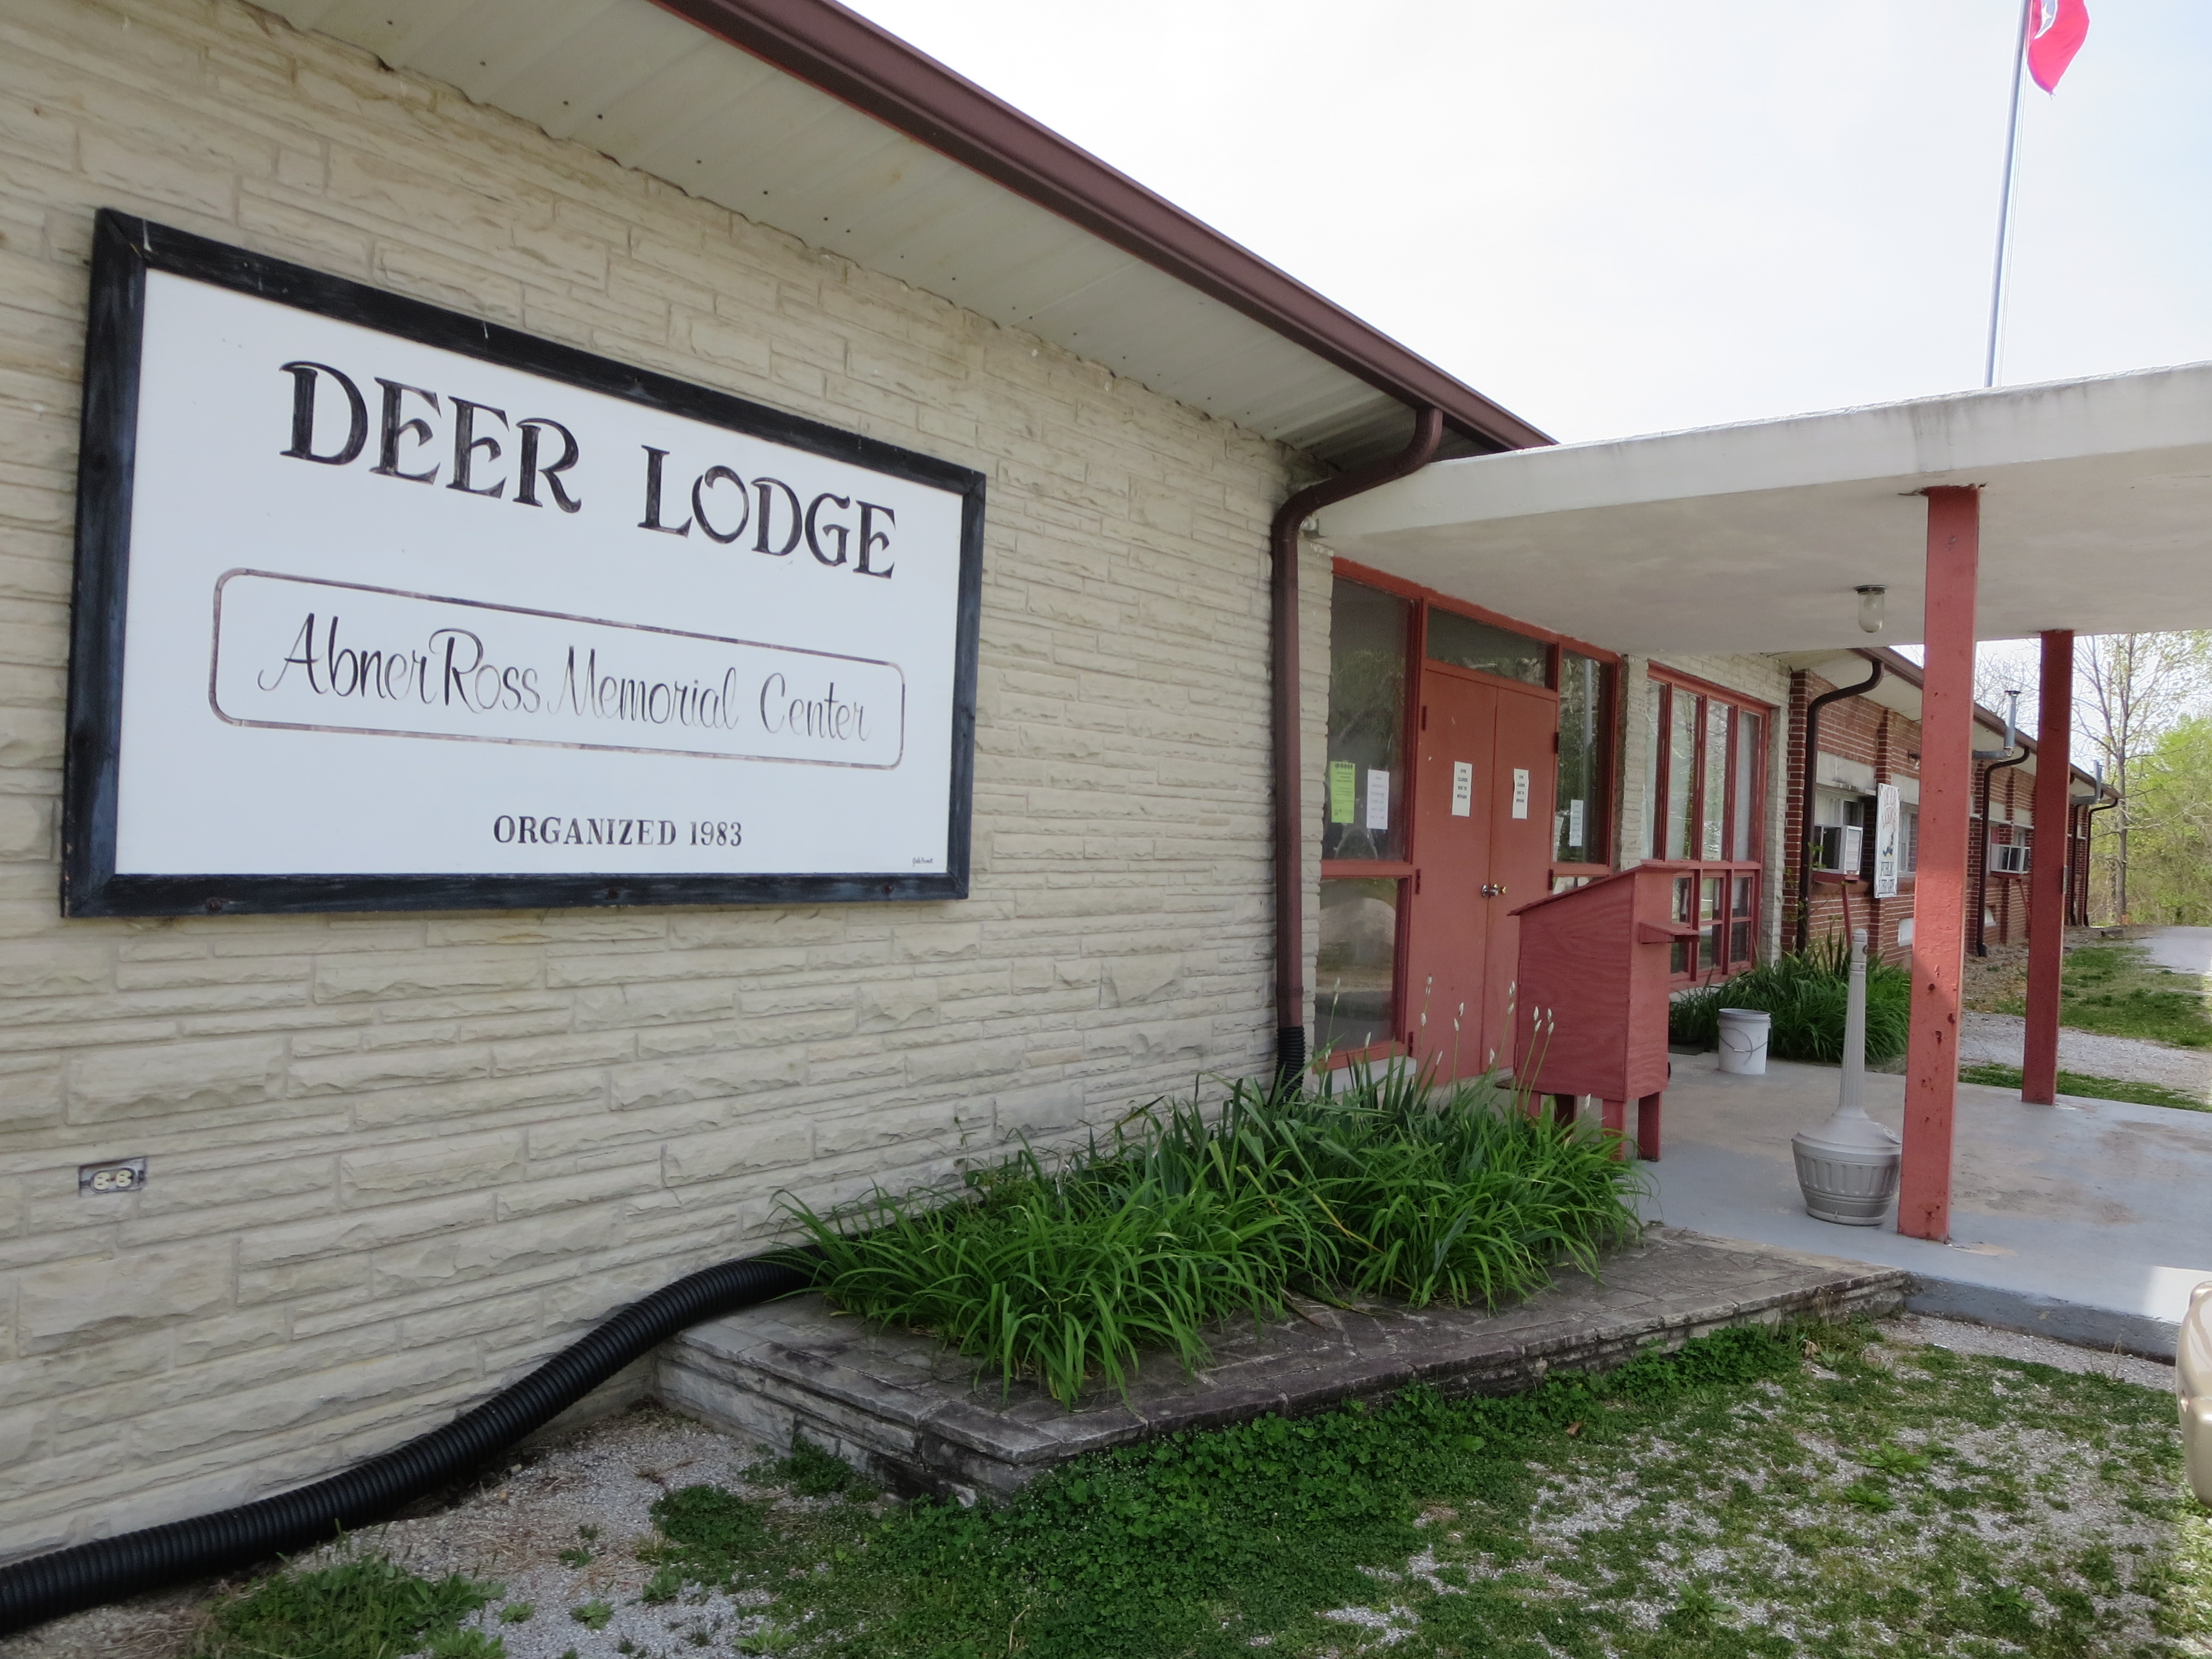 Deer Lodge Public Library